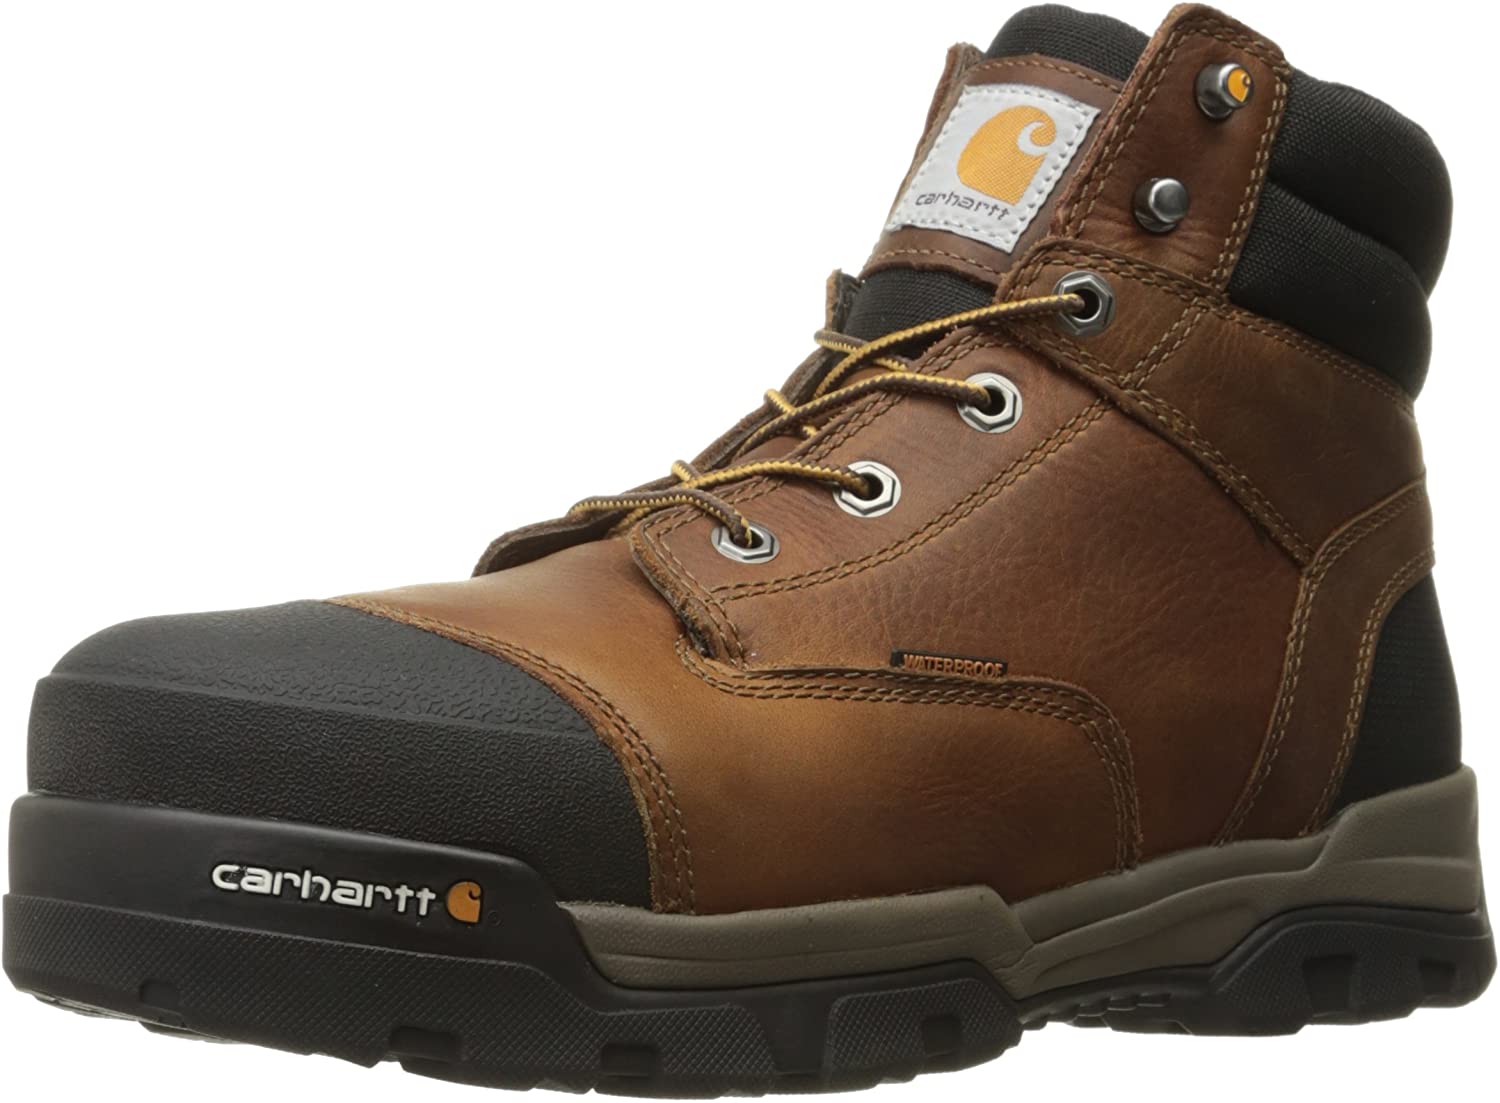 Carhartt 6” Waterproof Steel Toe Wedge Lace Up Work Boots